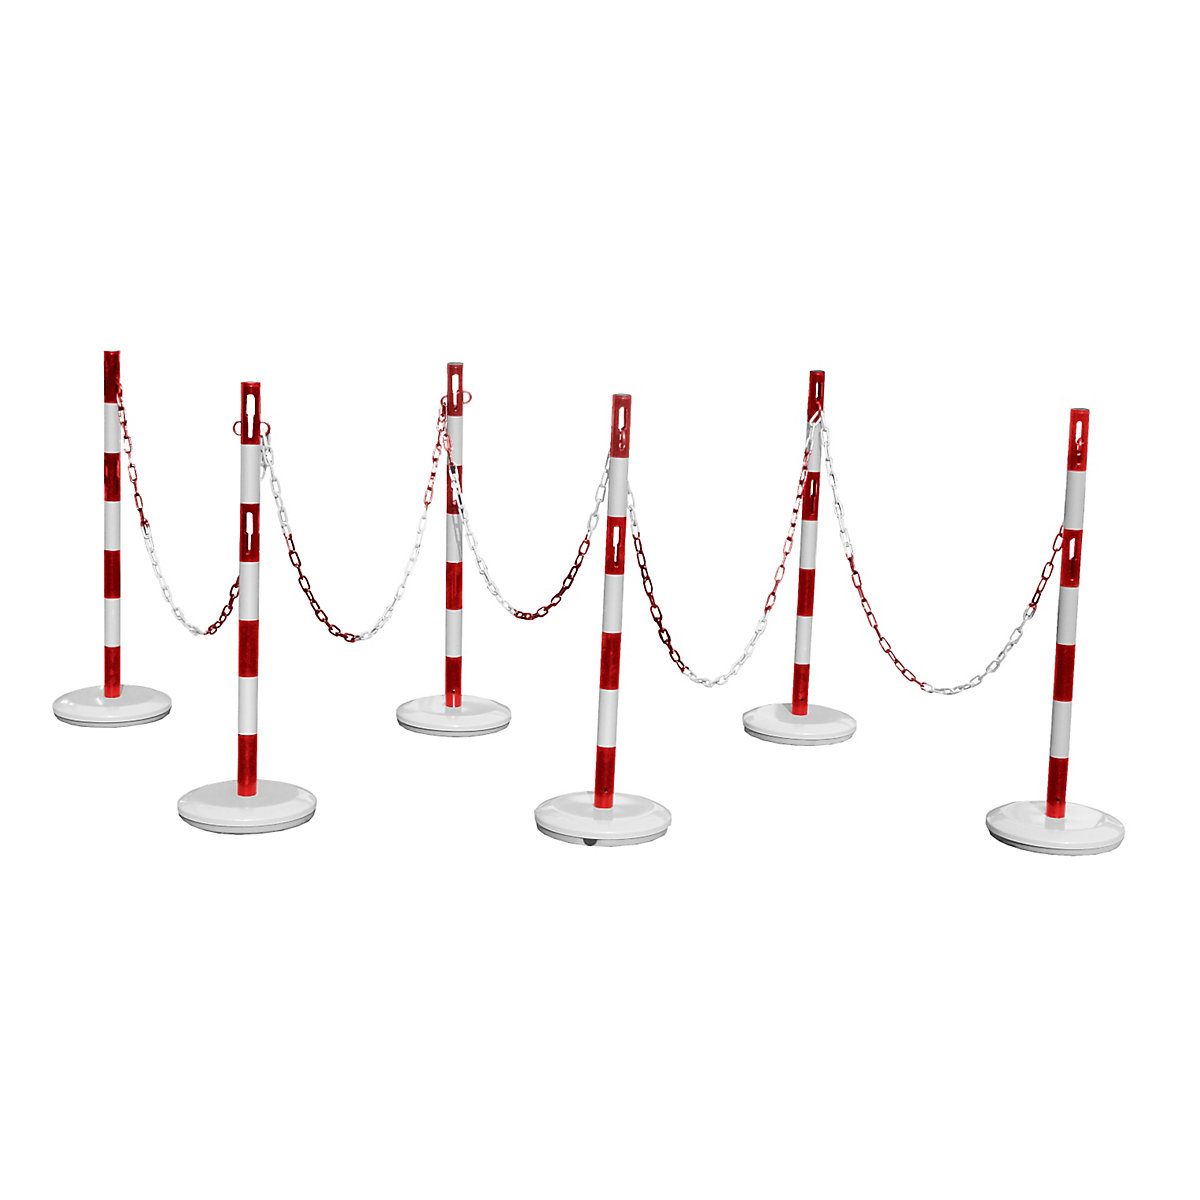 Afzetpaalset met ketting – VISO, 6 palen, ketting 15 m, rood/wit-4